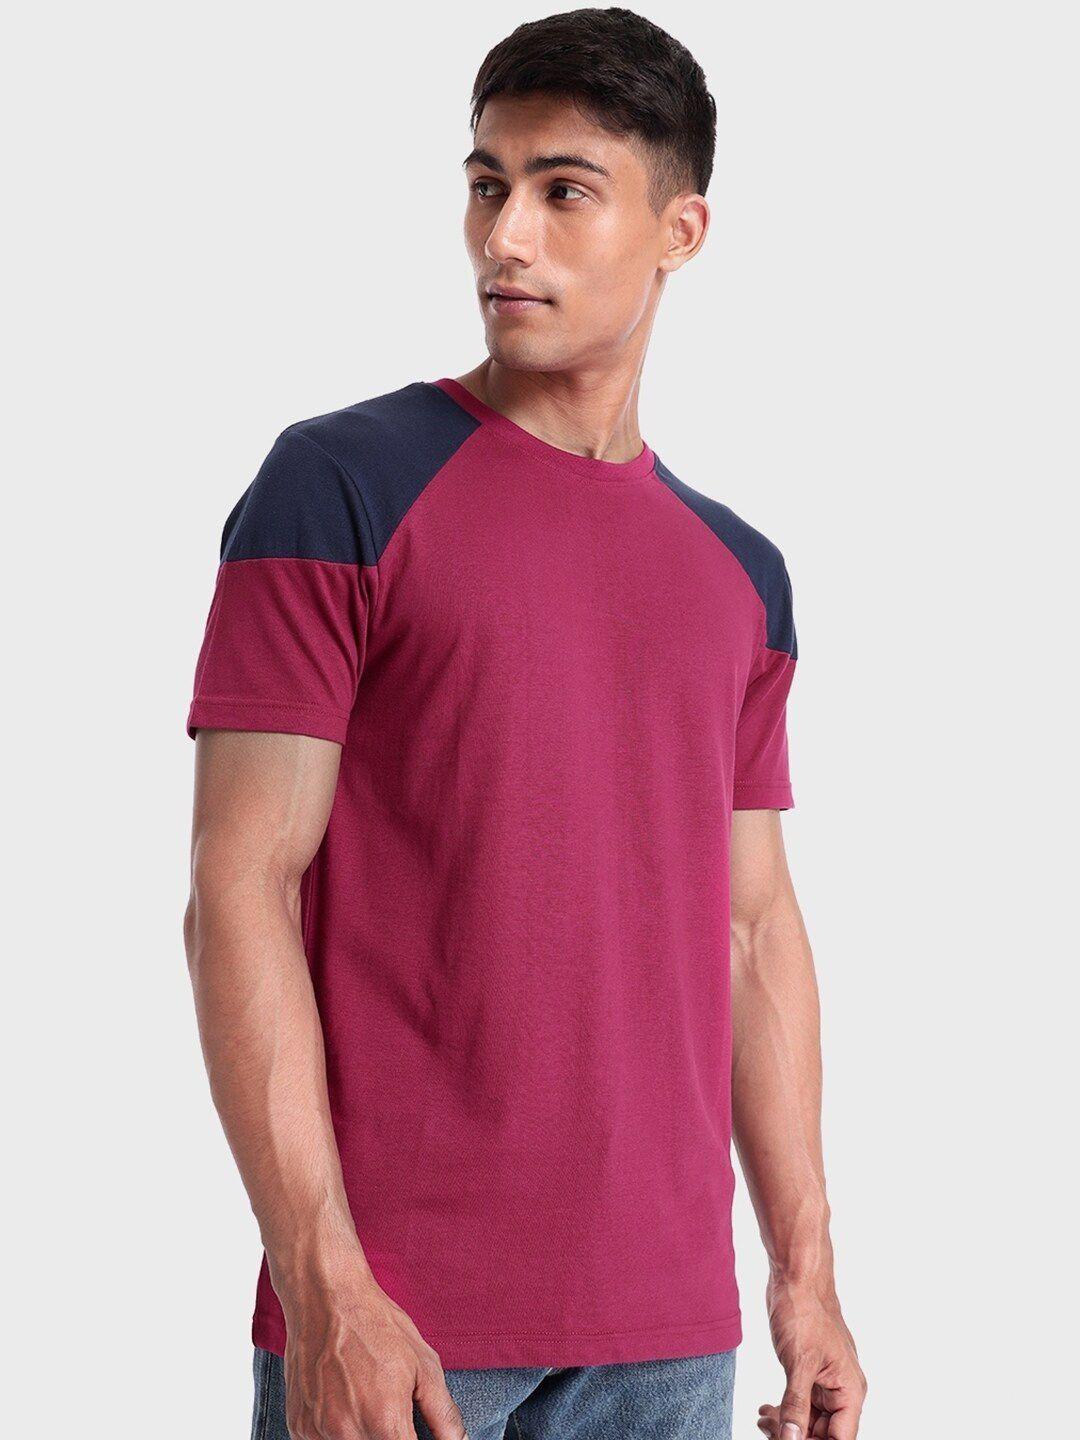 bewakoof men colourblocked cotton t-shirt